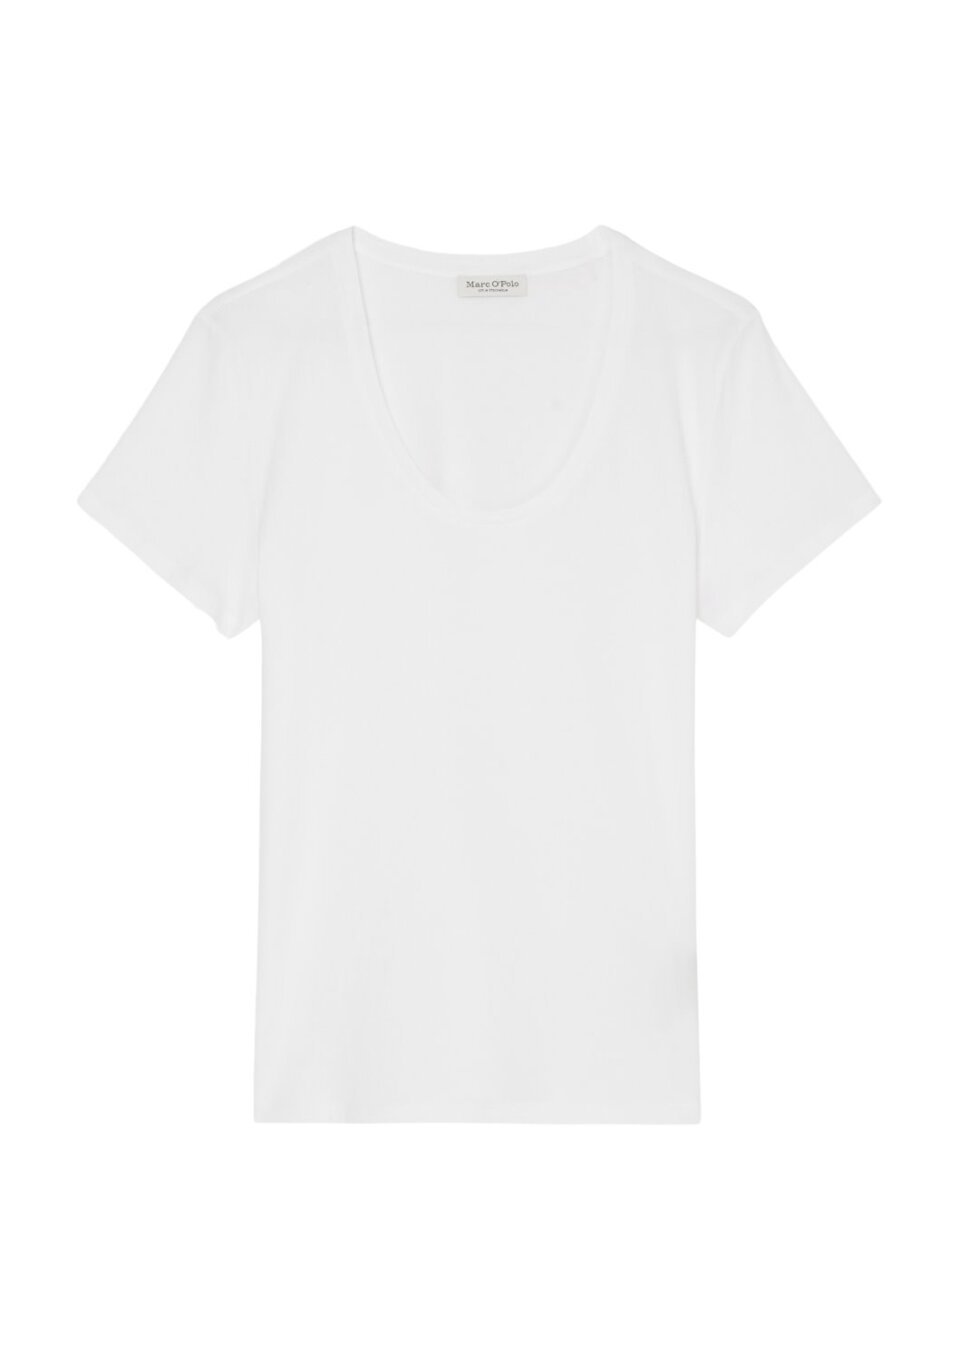 T-shirt, short sleeve, round neck